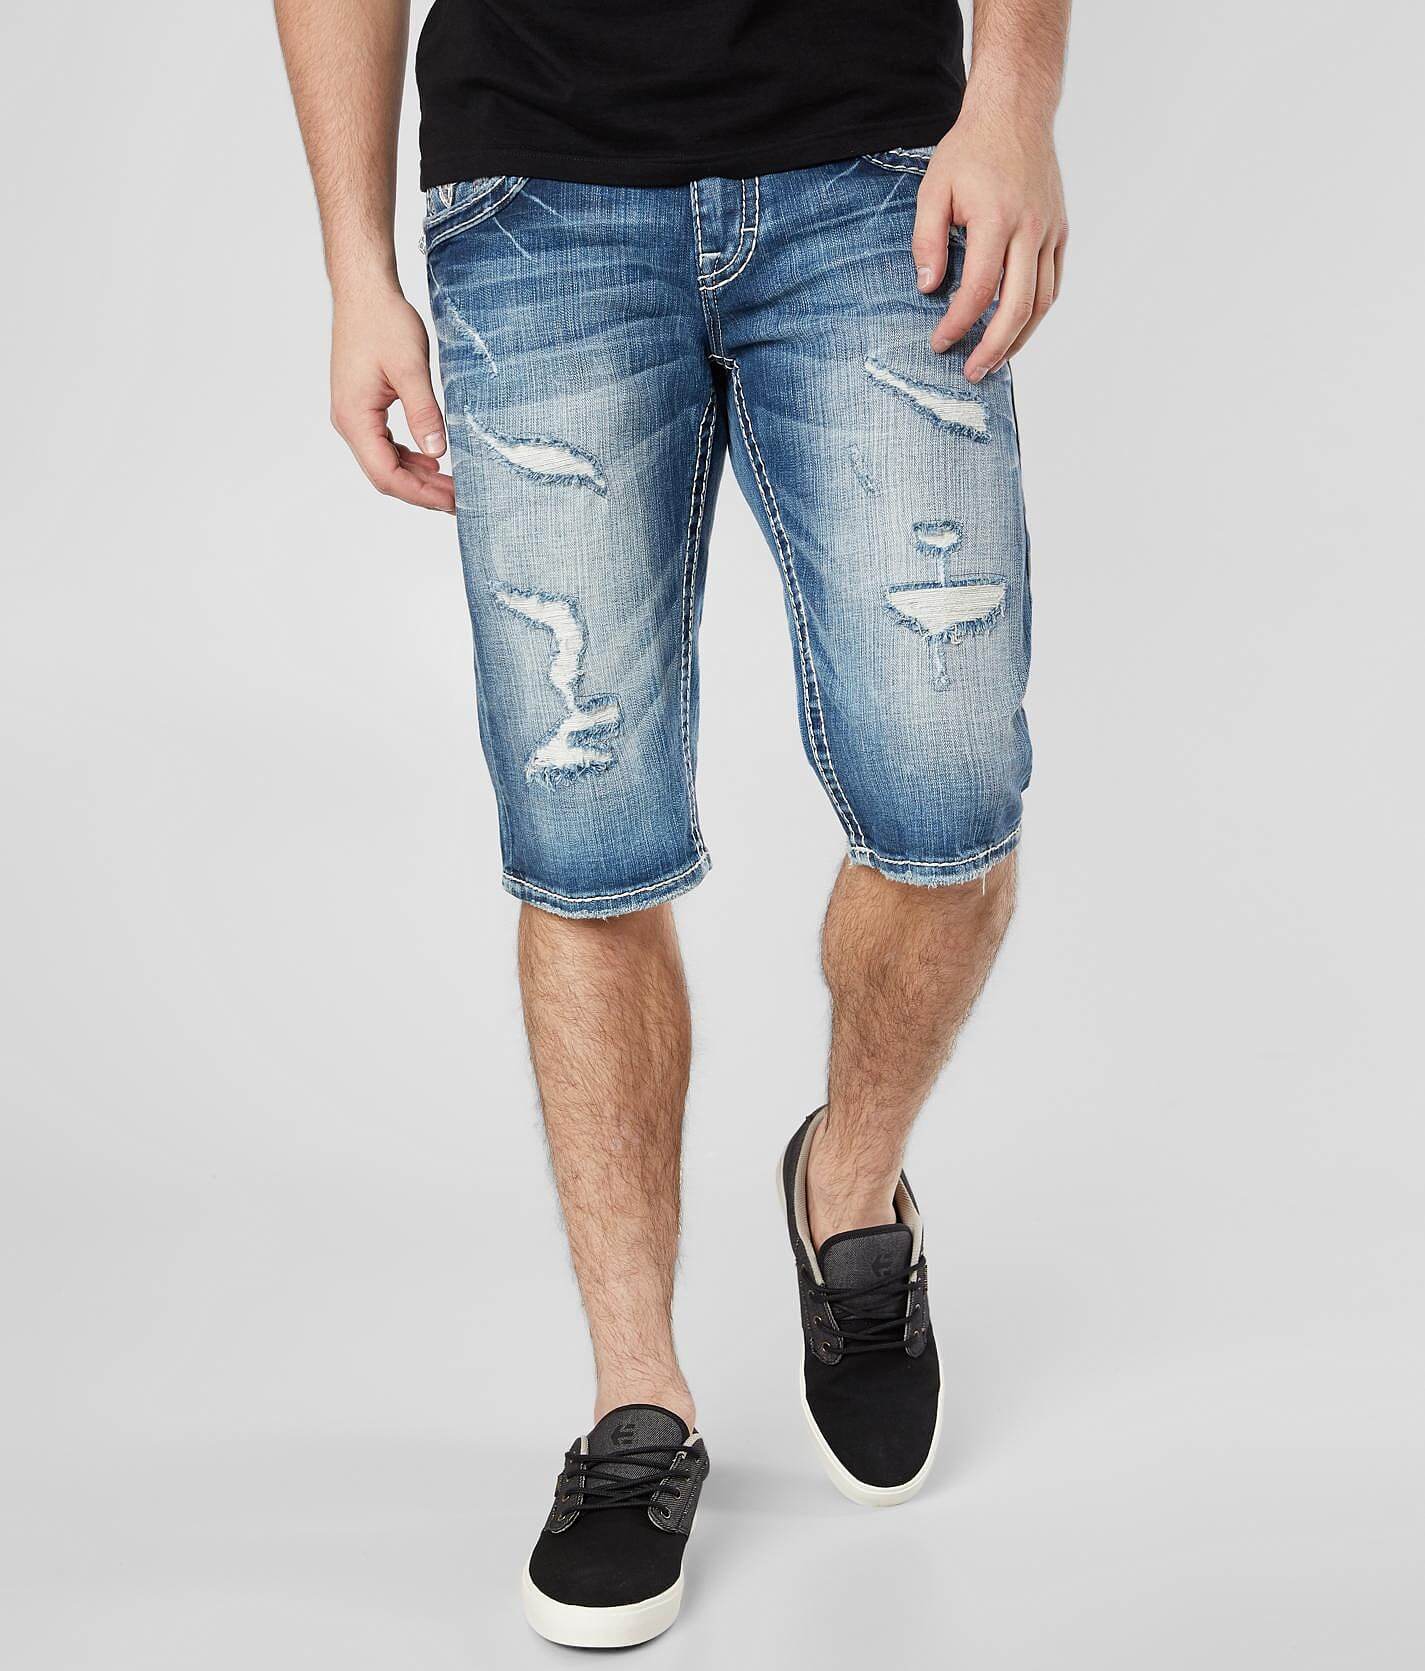 buckle mens jean shorts